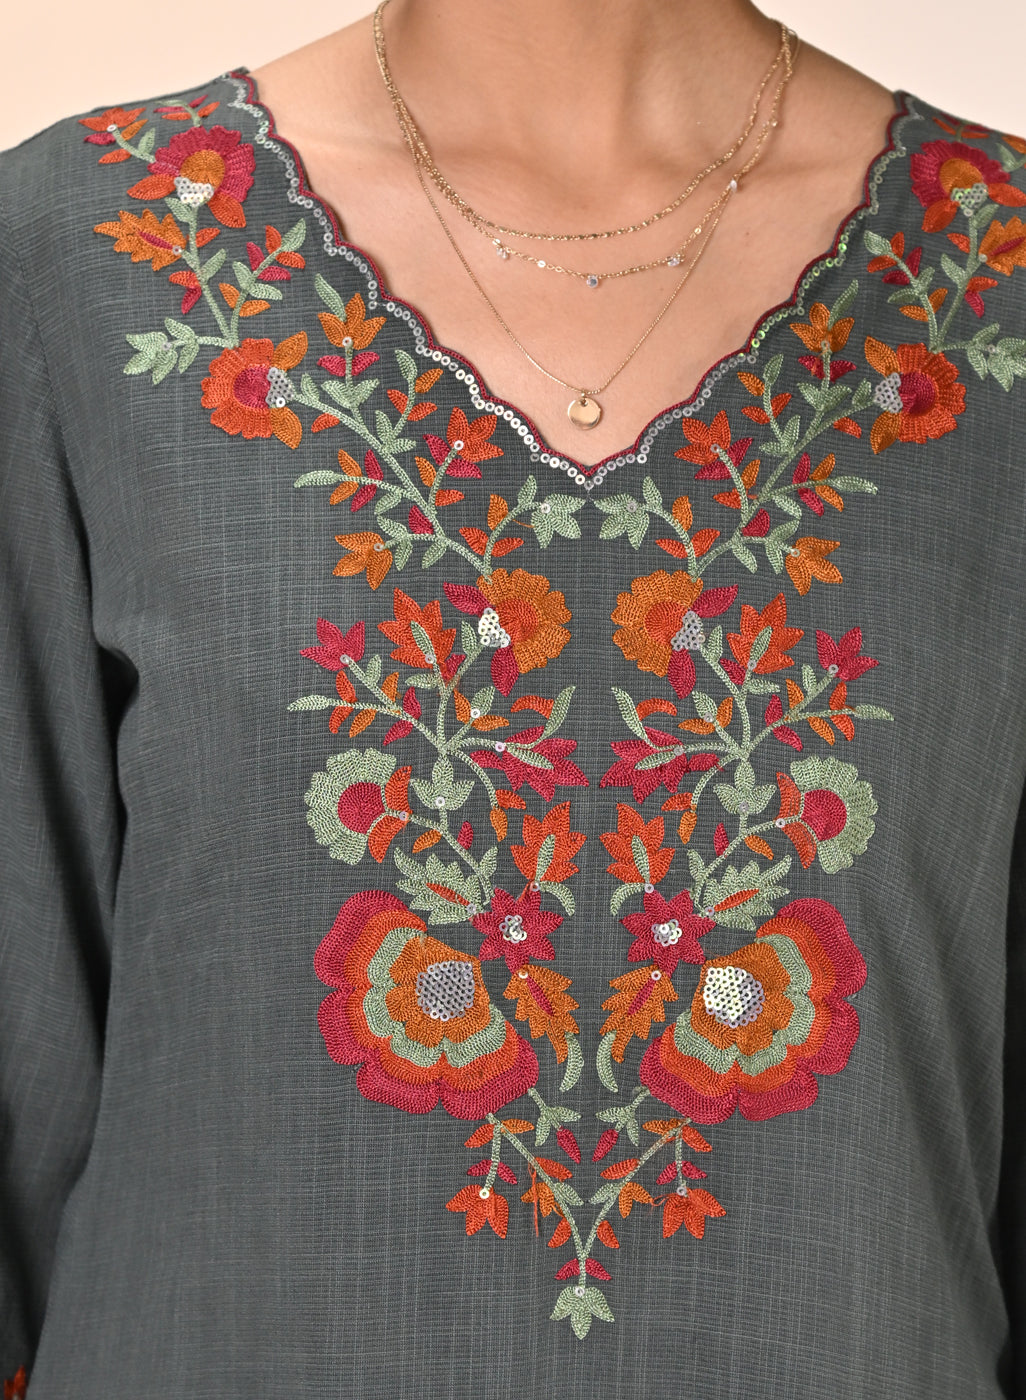 Kamali Iron Grey Embroidered Cotton Linen Slub Designer Kurta Set for Women